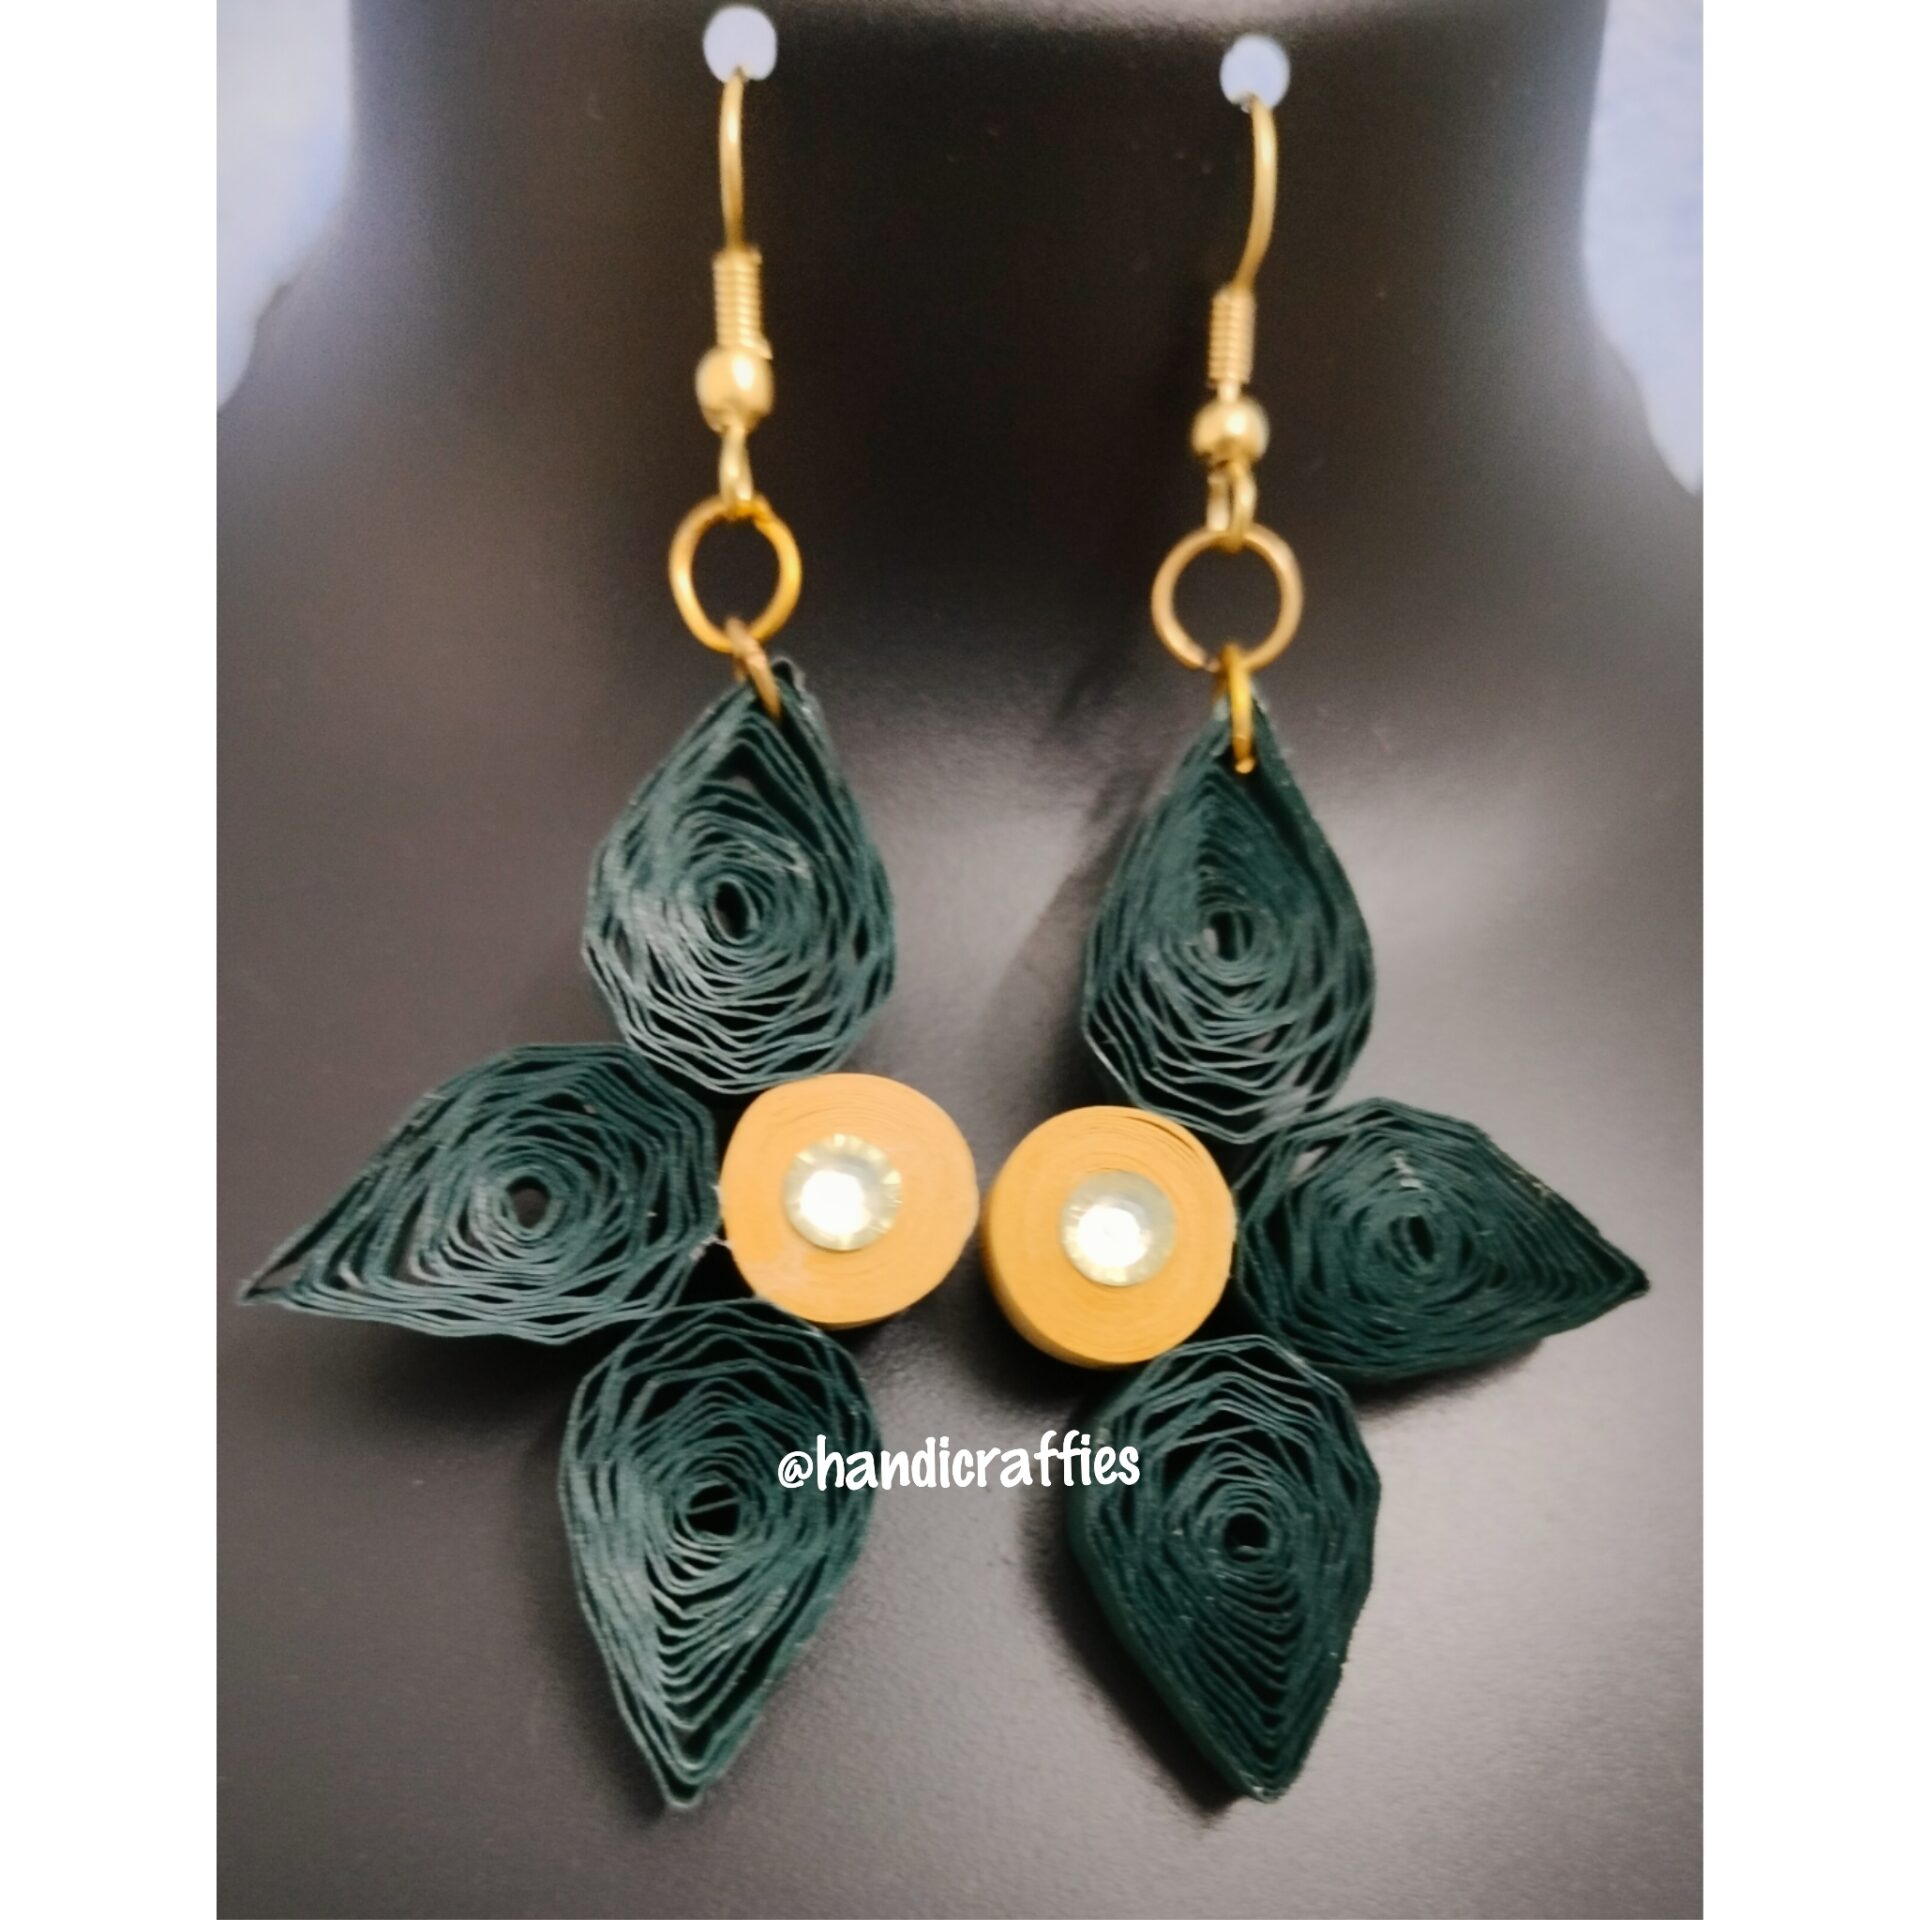 Buy Quilling Jhumka, Blue Green Jhumka, Quilling earrings, Handcrafted  Jhumka, Peacock design earrings, Dangle Earrings at Amazon.in